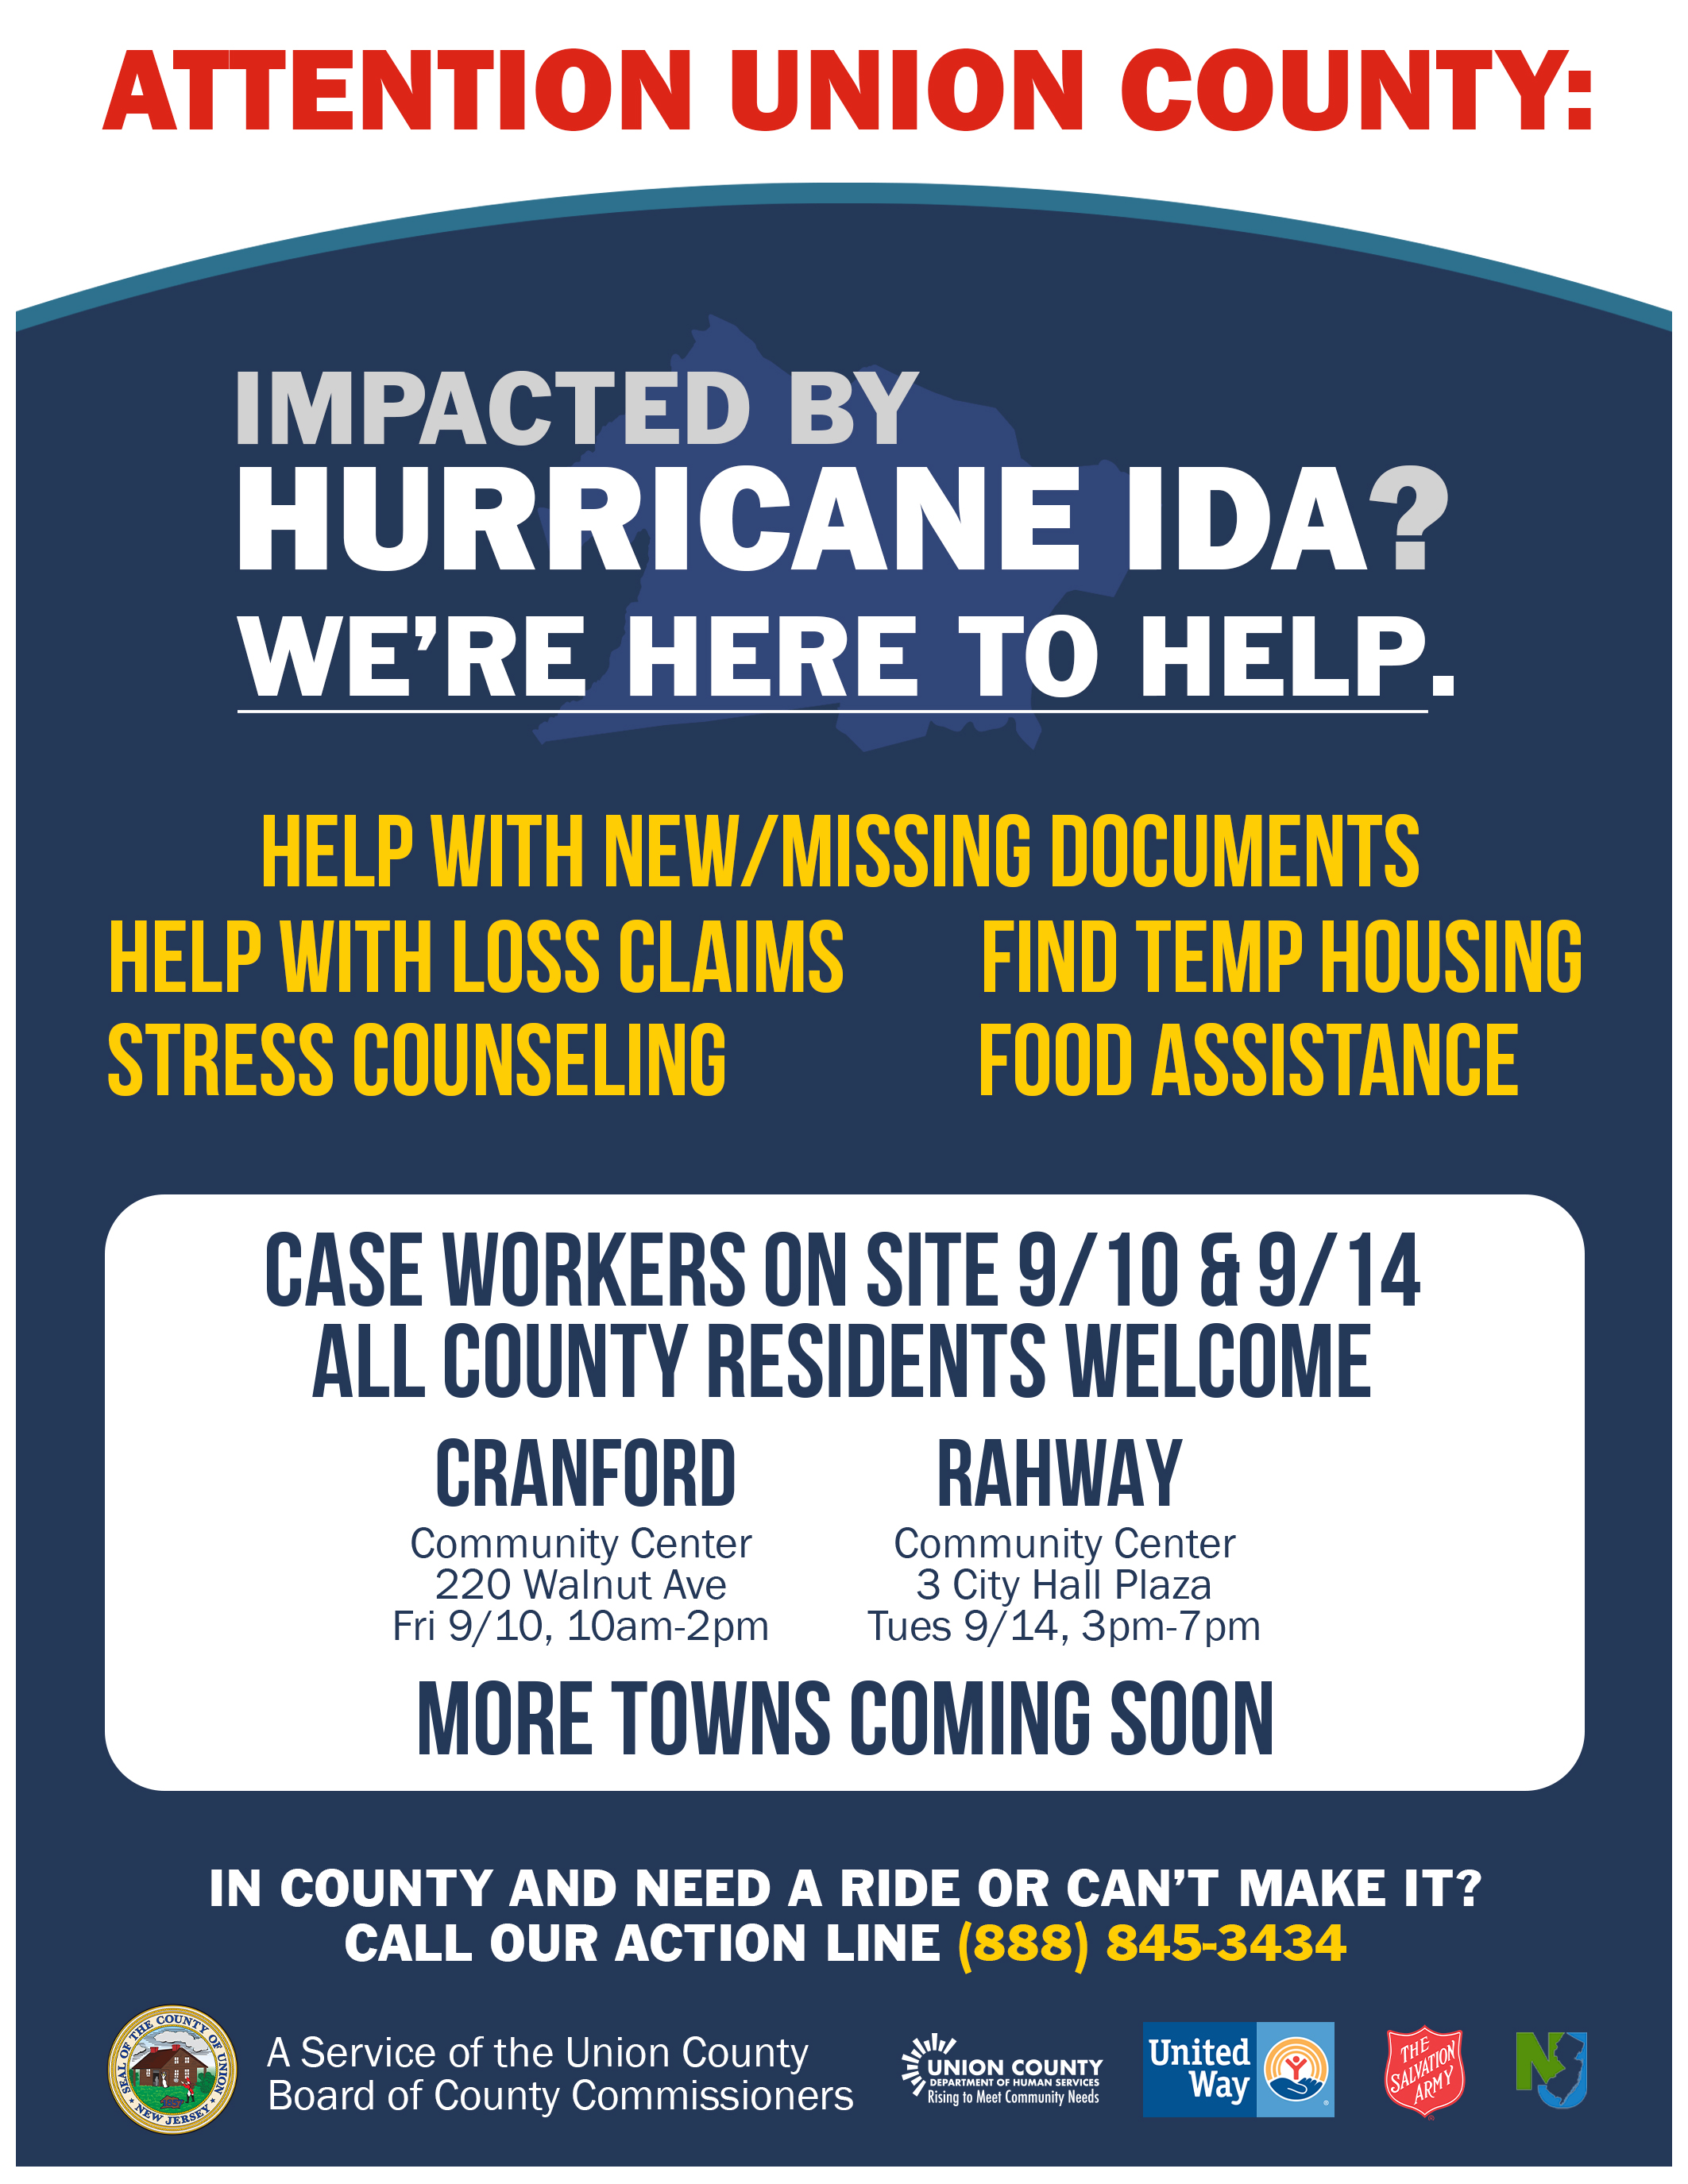 Union county aid for Hurricane IDA